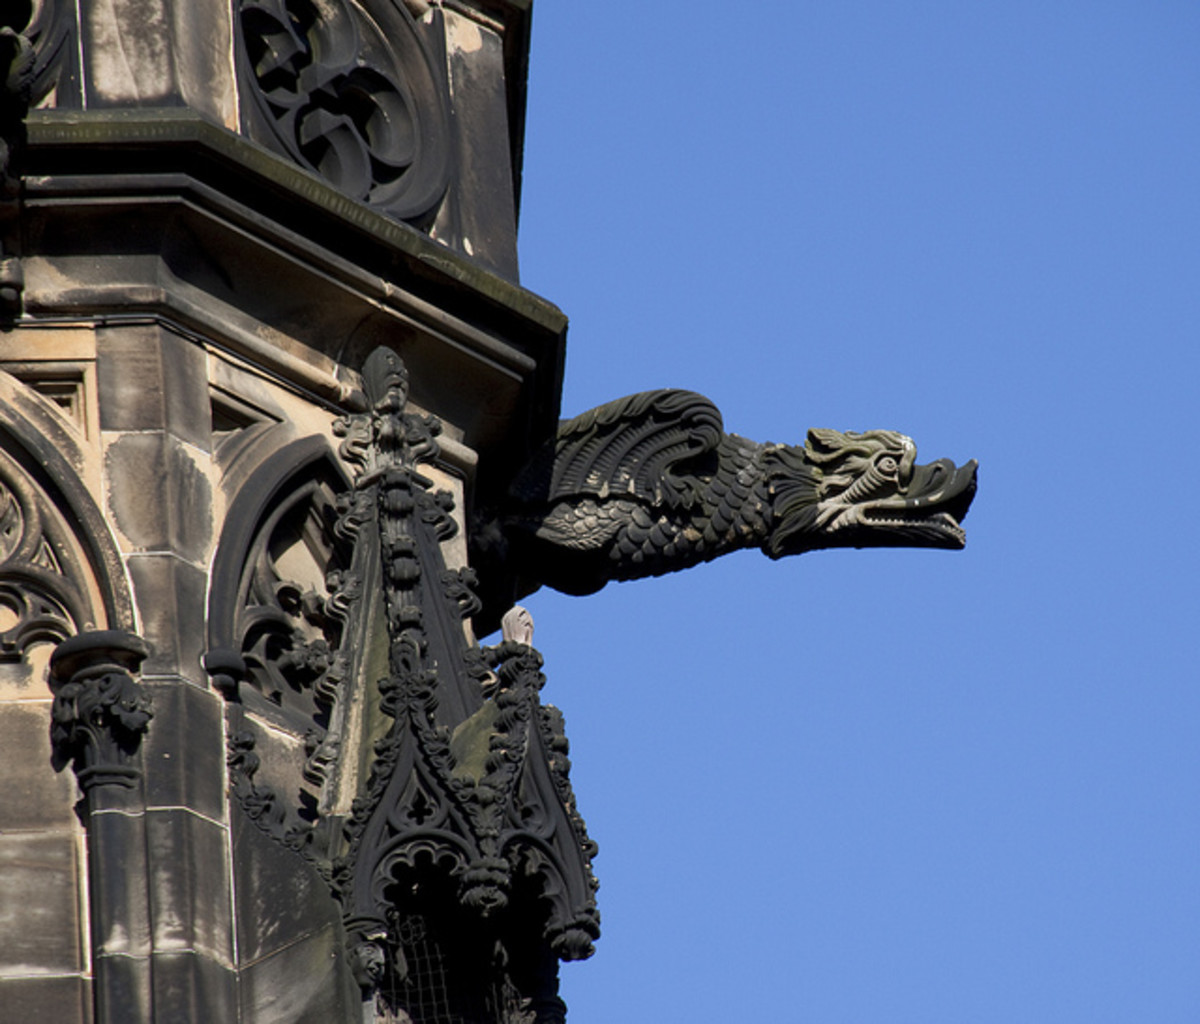 the-gothic-rocket-the-edinburgh-monument-to-sir-walter-scott